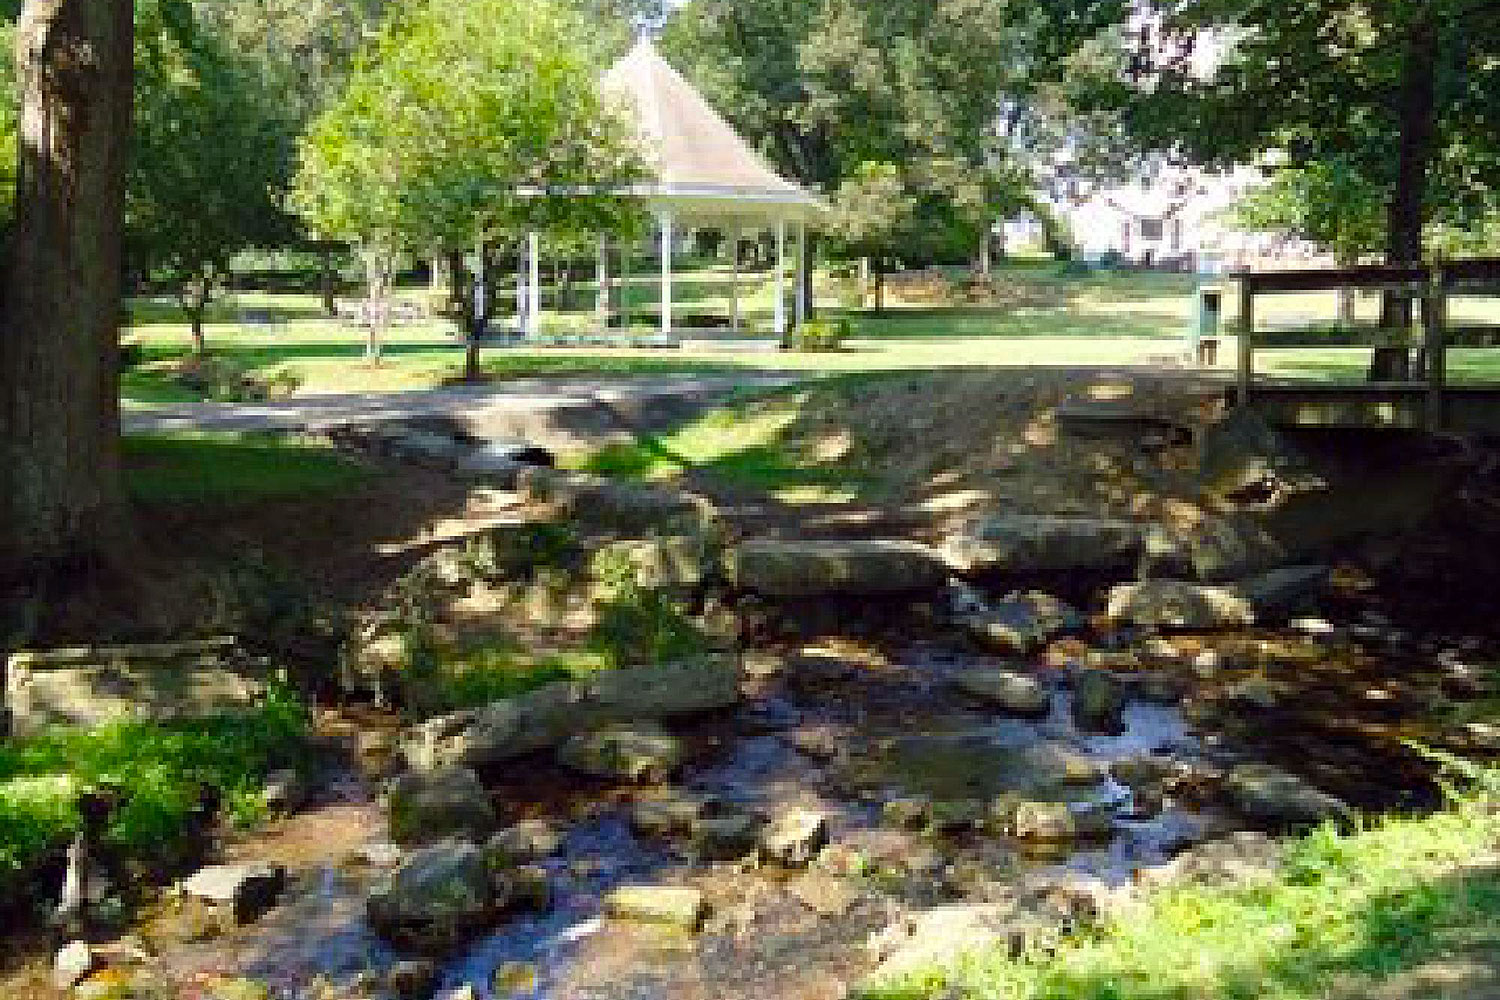 Crockett Springs Park Gazebo